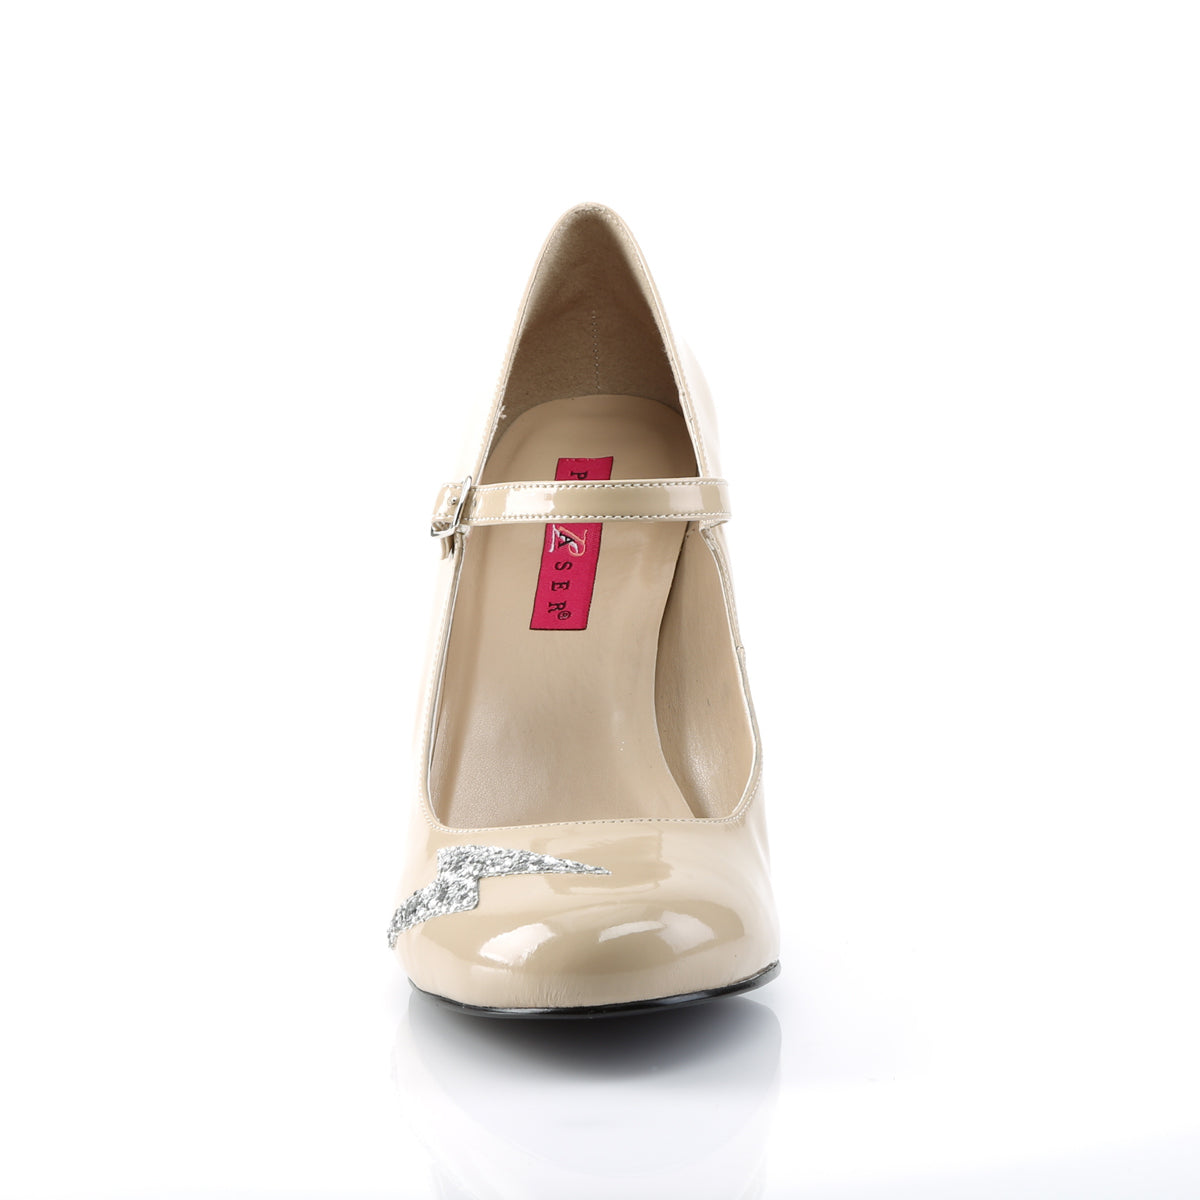 QUEEN-02 Large Size Ladies Shoes Pleaser Pink Label Single Soles Cream Pat-Slv Glitter